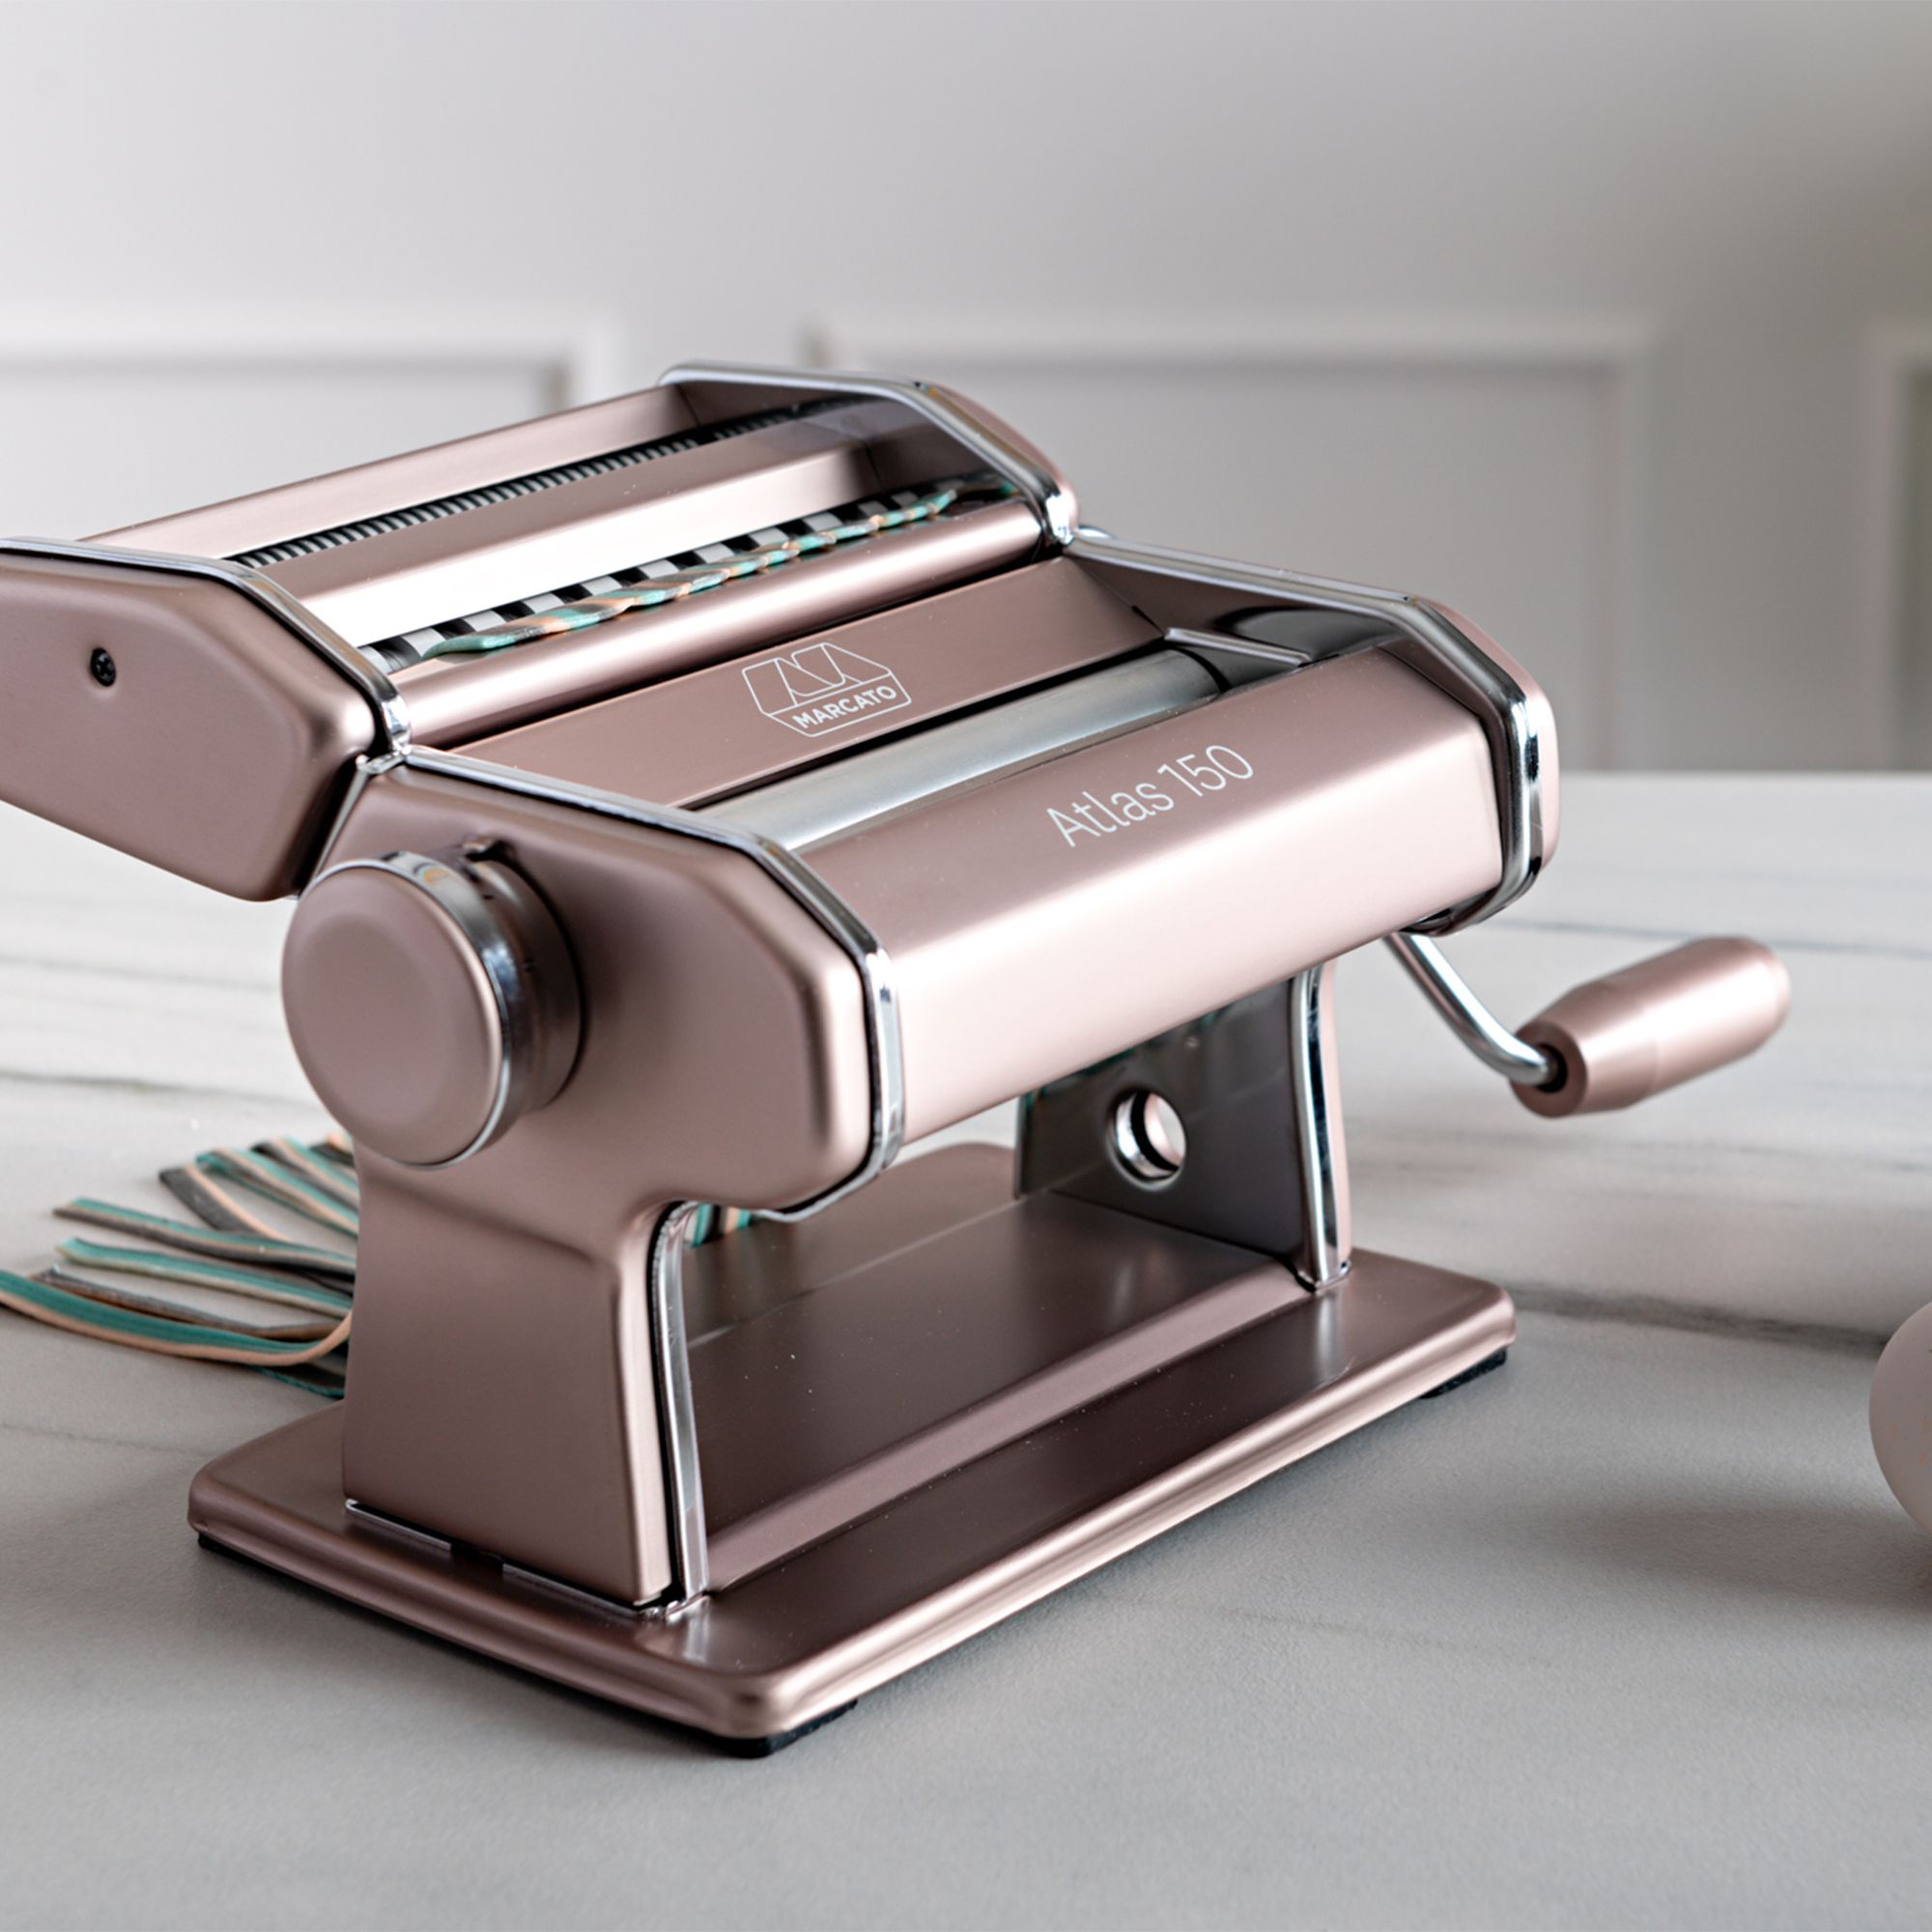 Marcato - Pasta machine "Atlas 150 Design" Powder Rosa